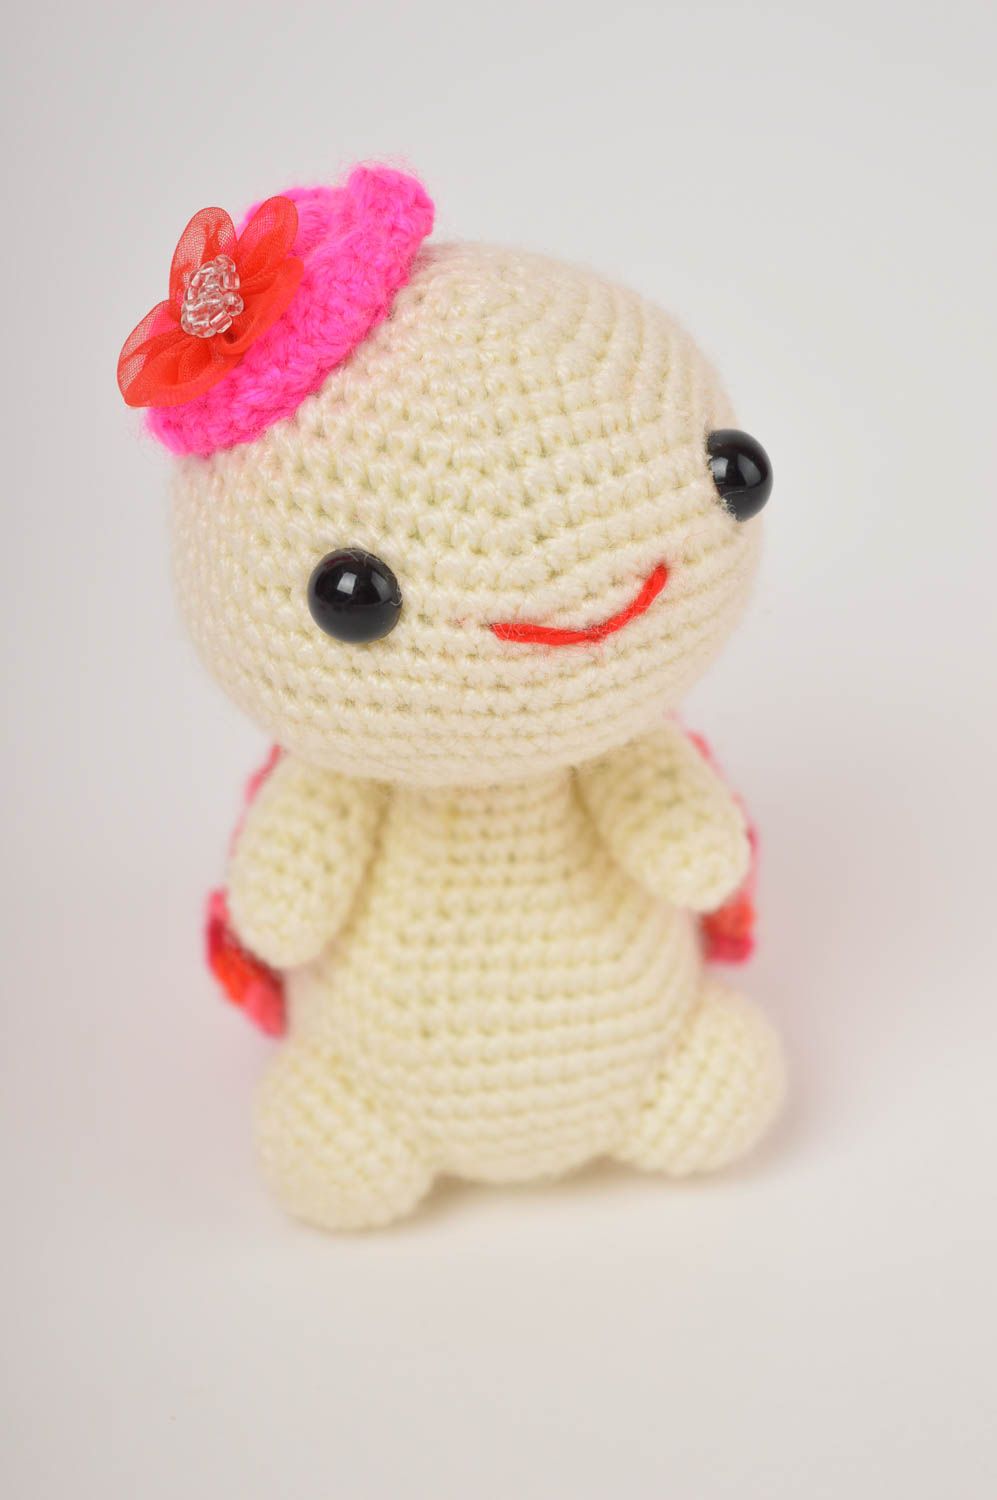 Designer beautiful toy handmade crocheted toy for babied nursery decor photo 2